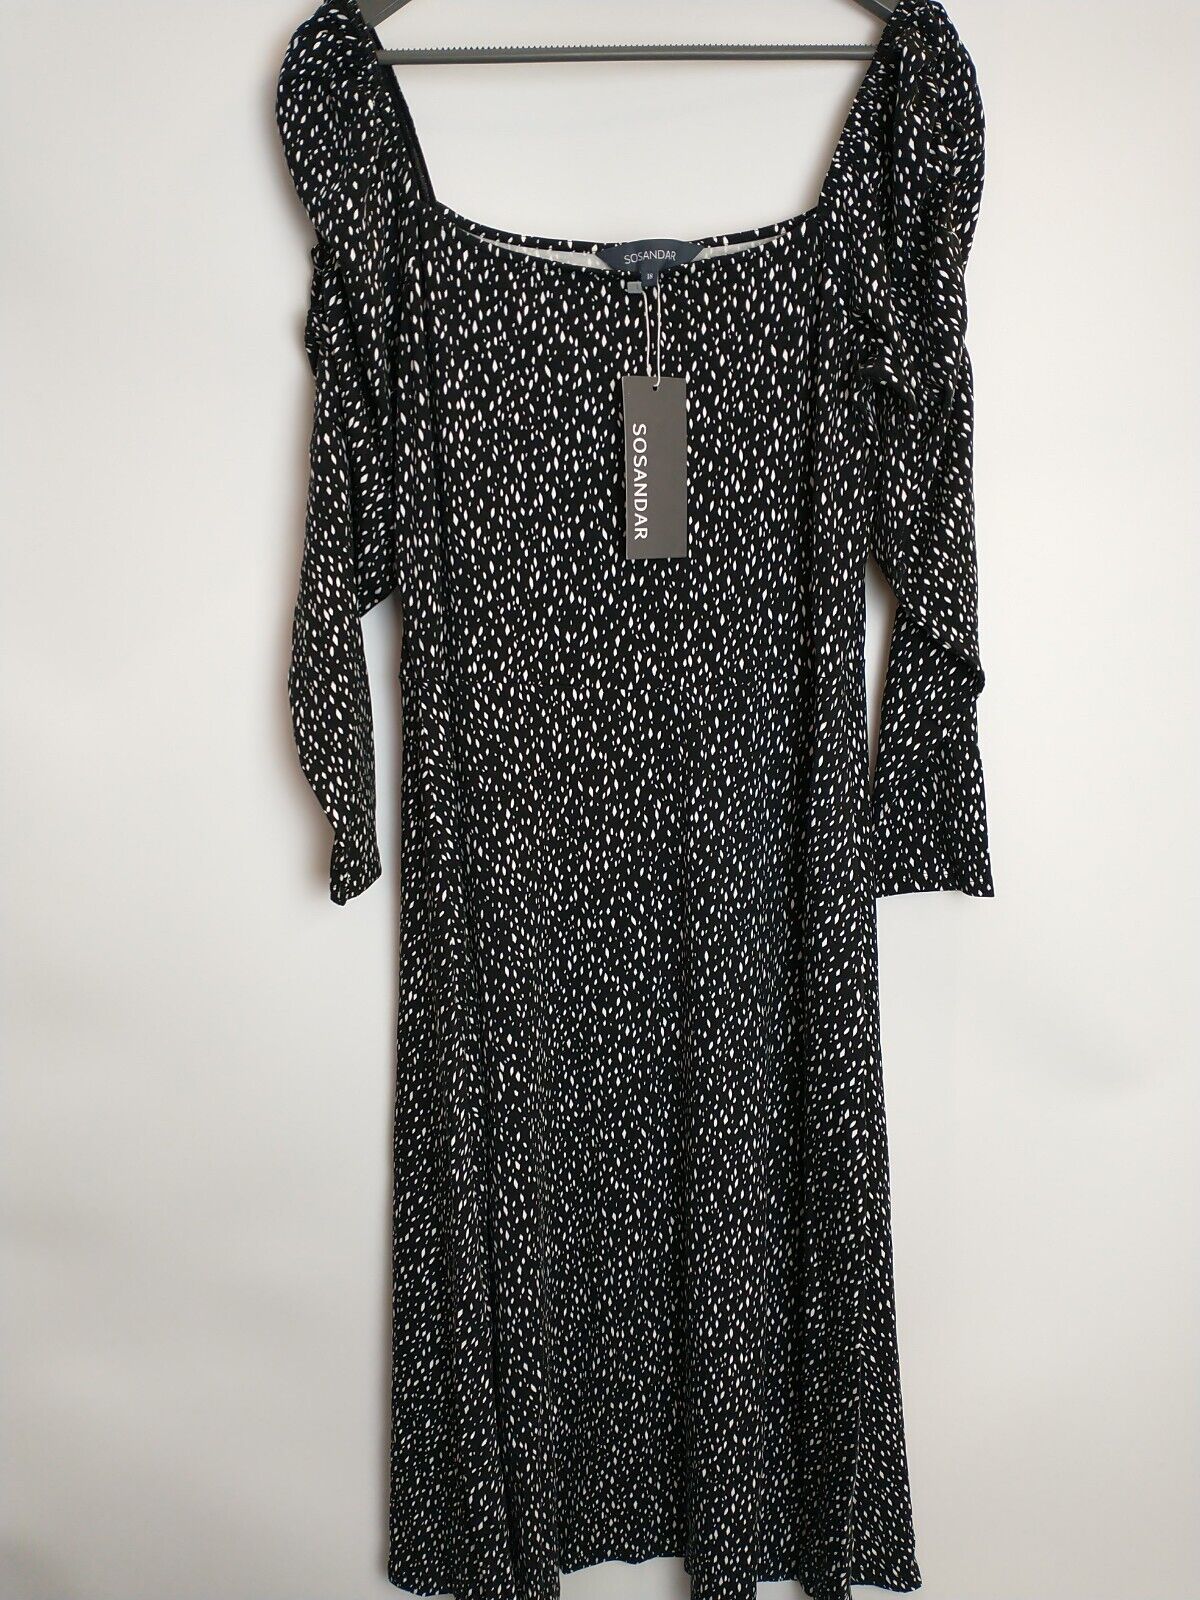 Sosandar Black Fleck Print Square Neck Jersey Midi Dress Size 8 **** V340